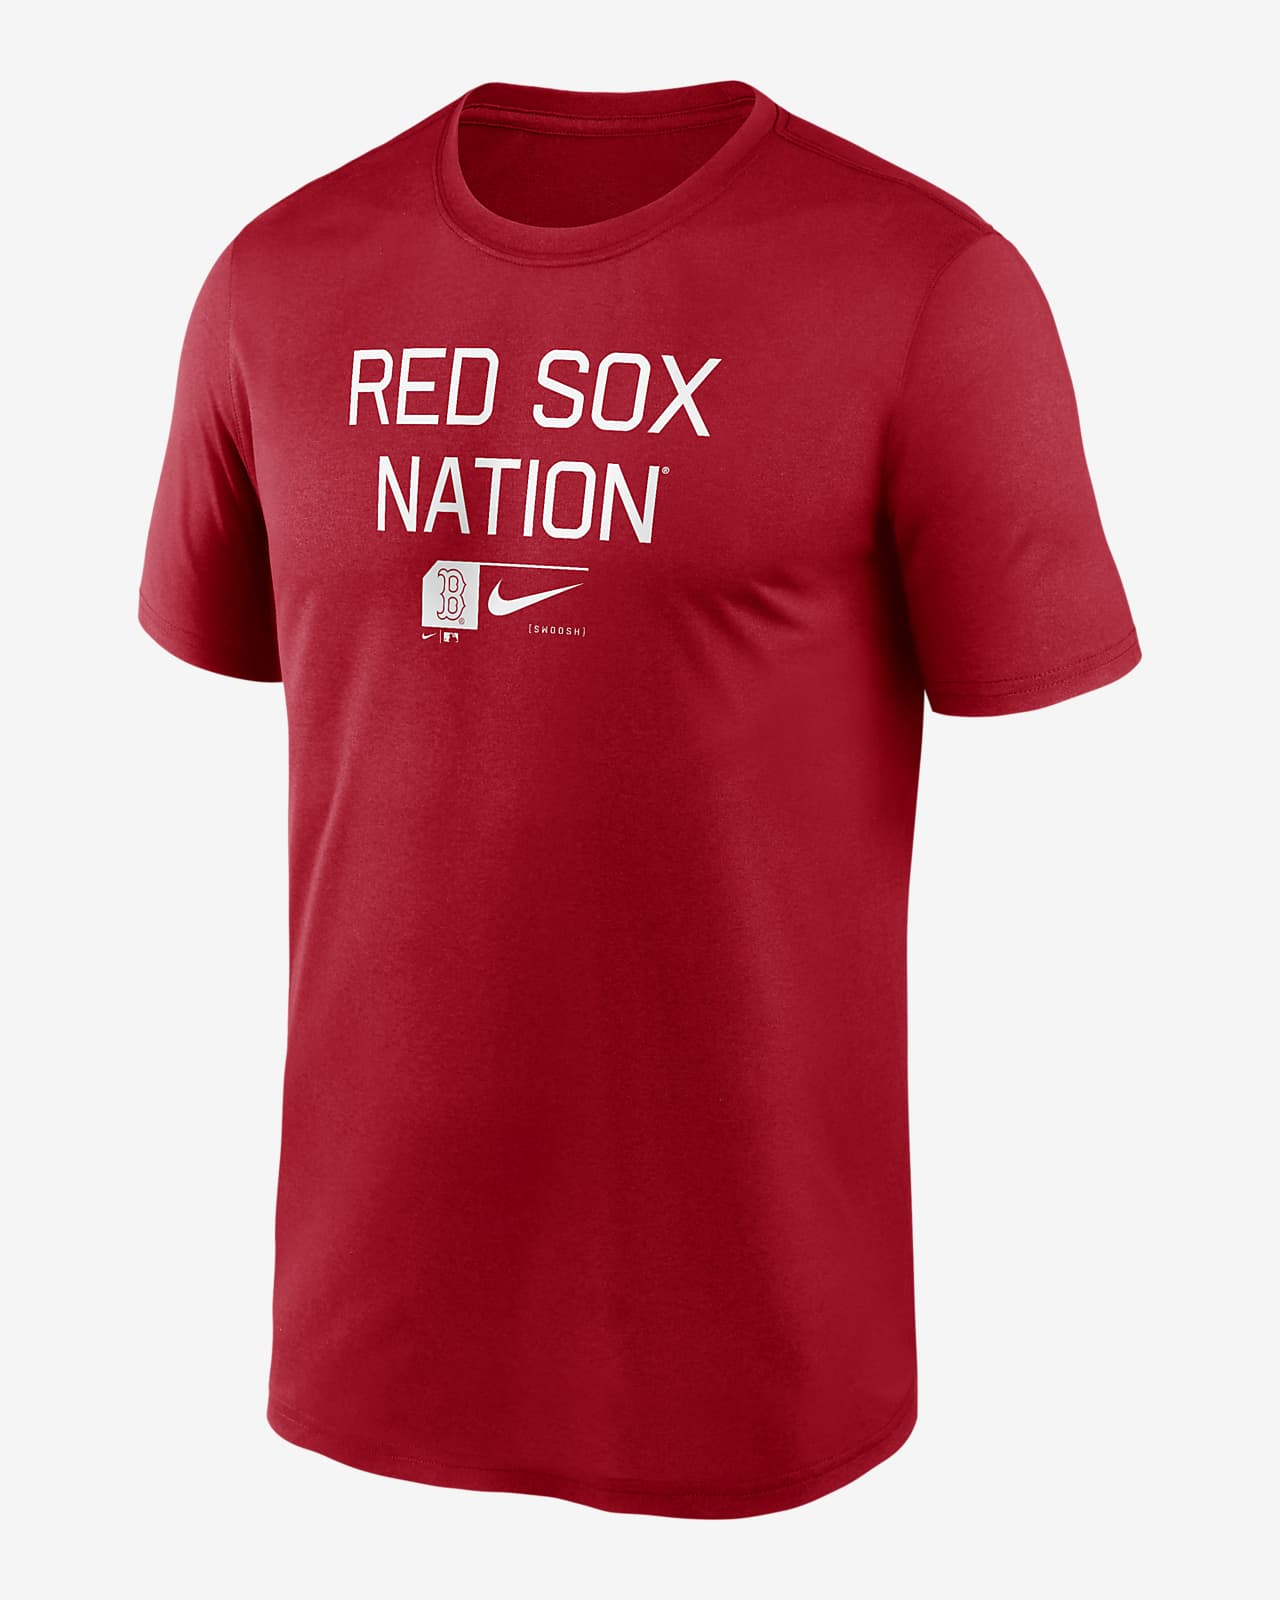 Playera Nike Dri-FIT de la MLB para hombre Boston Red Sox Baseball Phrase Legend